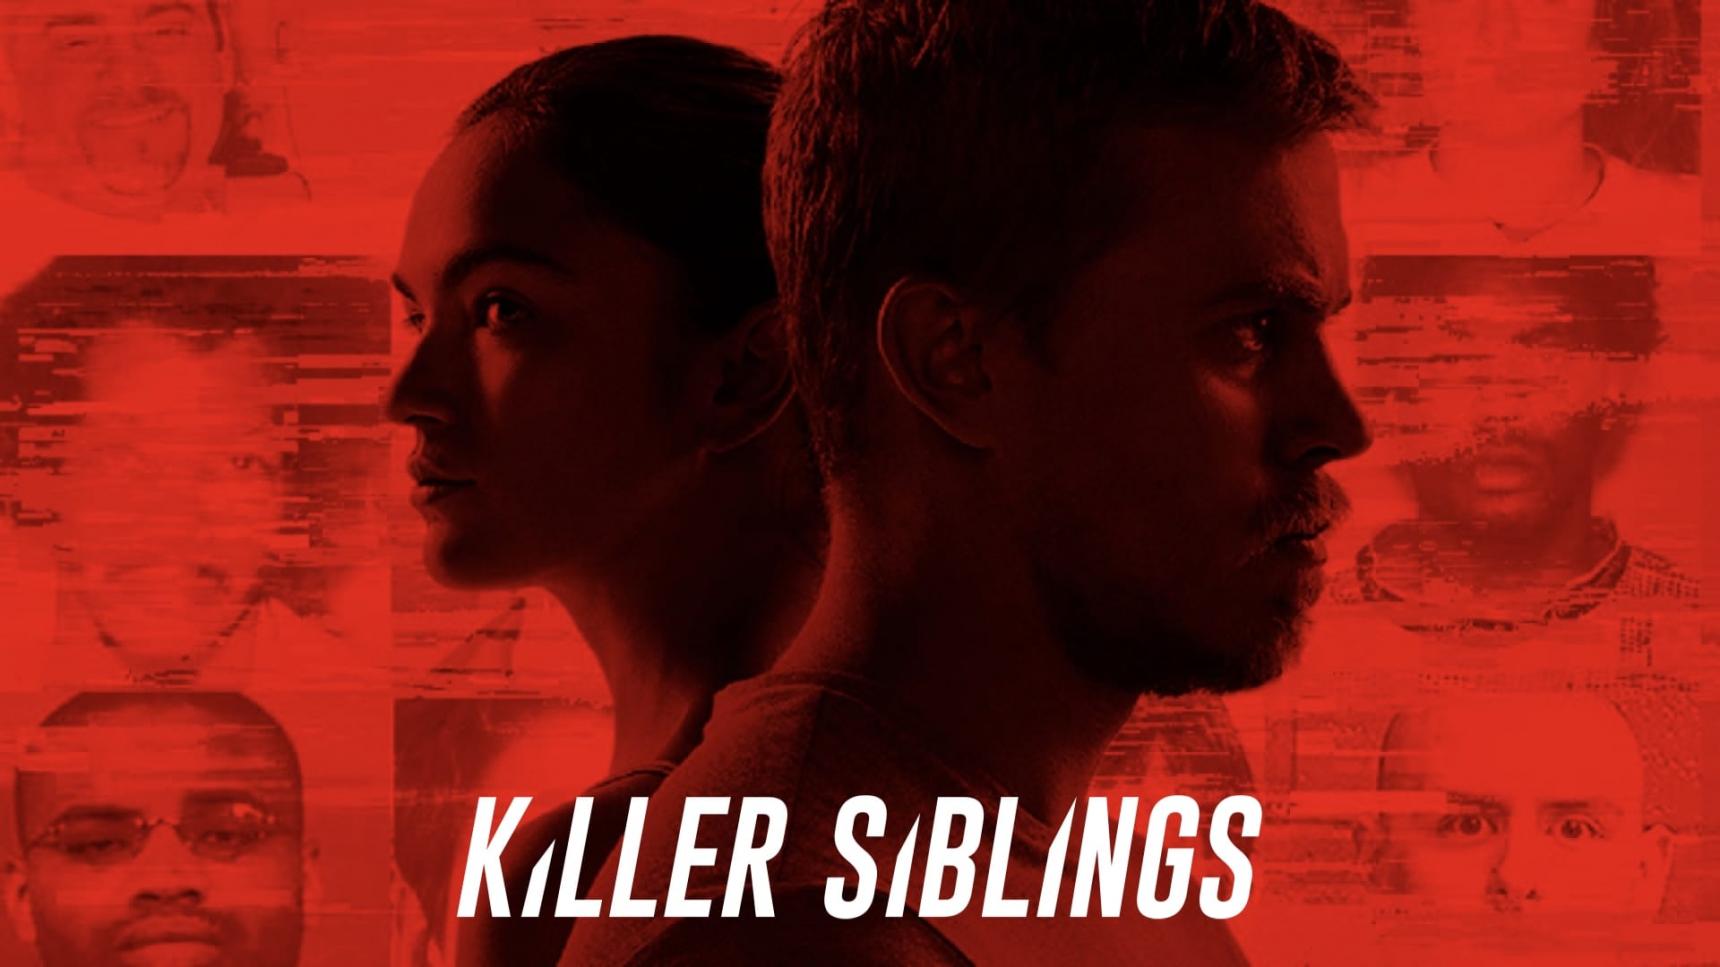 Poster del episodio 3 de Killer Siblings online